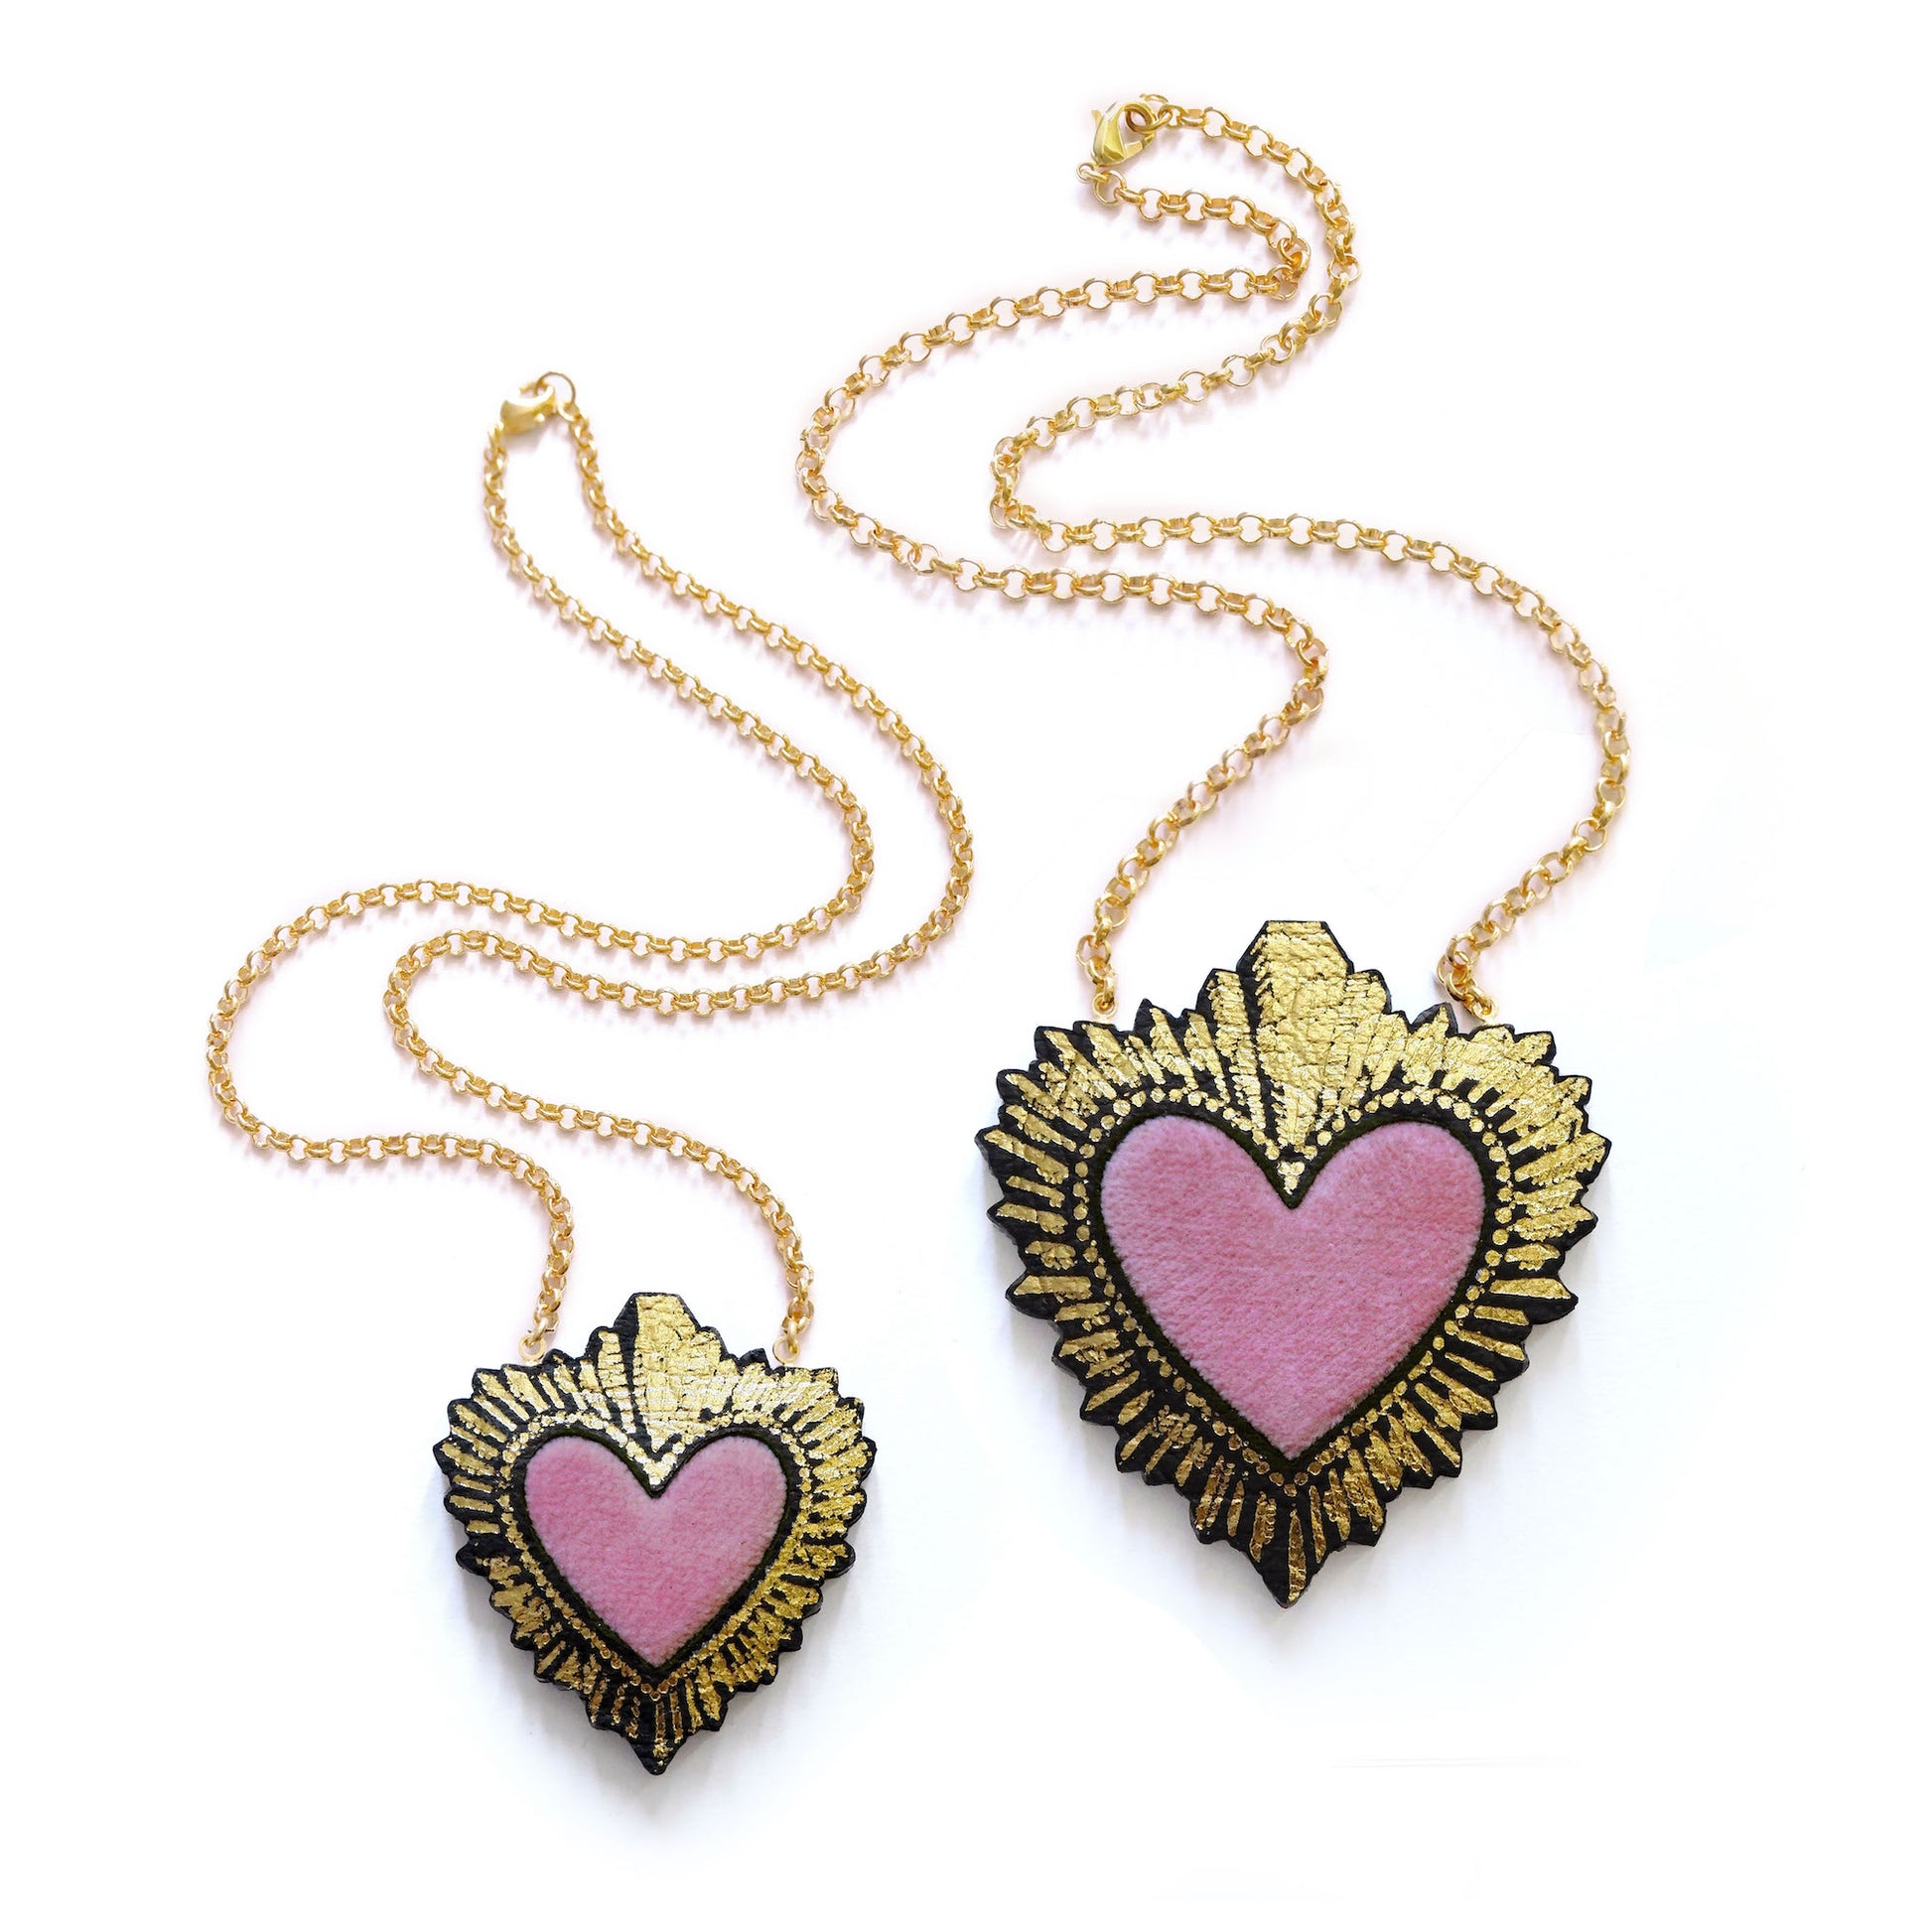 two sizes of pink velvet sacred heart pendant necklace, on gold belcher chain